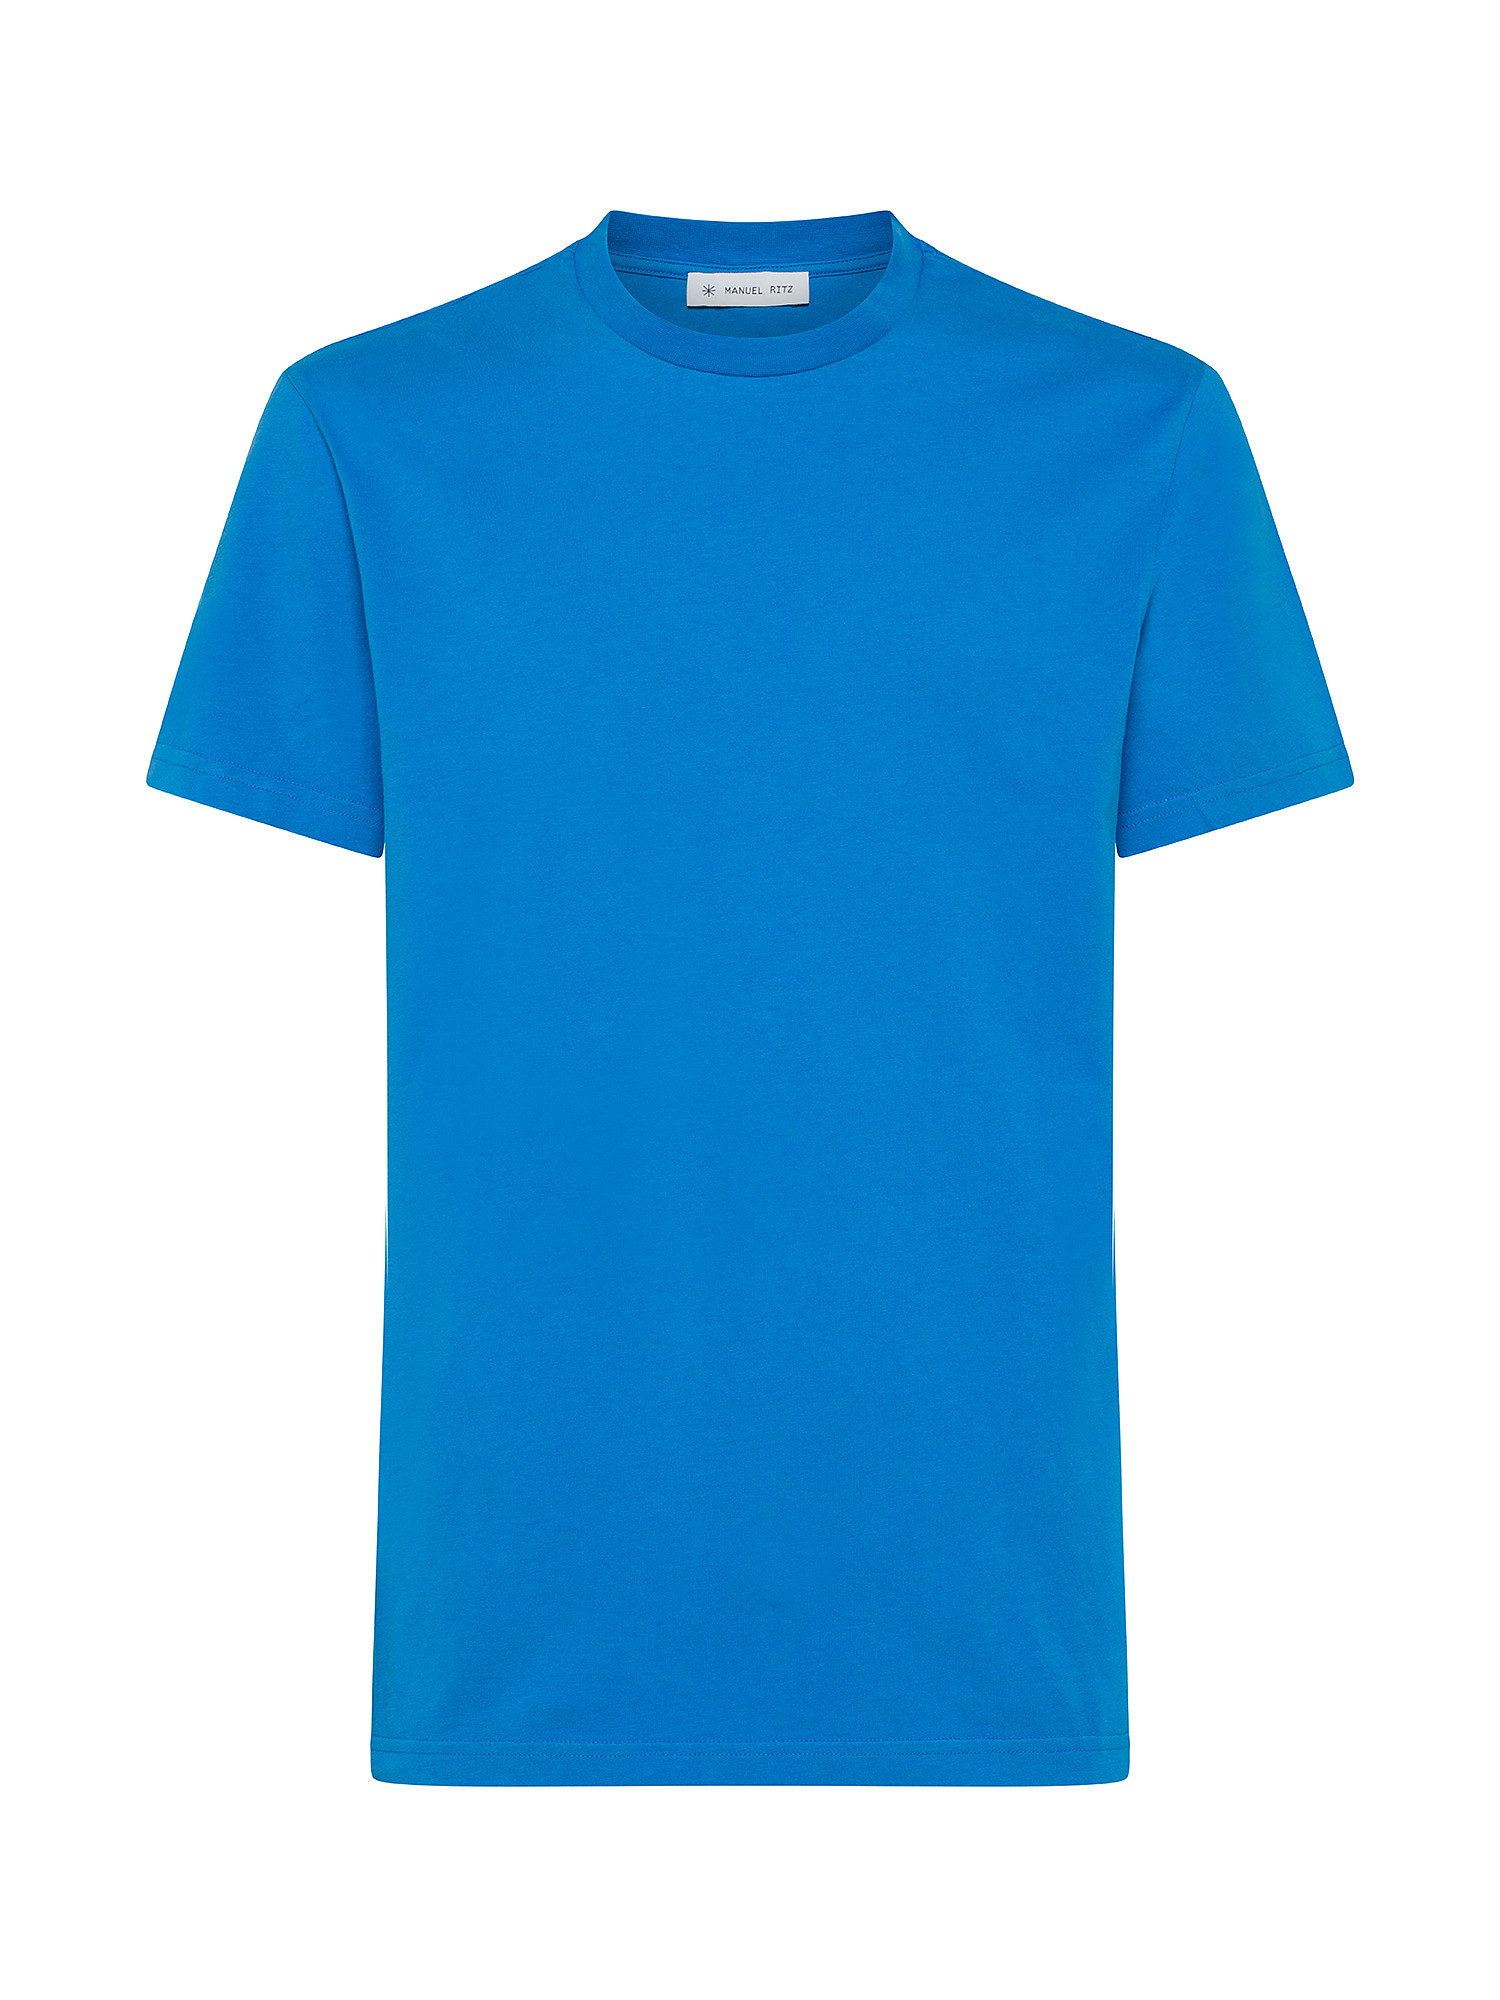 Manuel Ritz - Cotton T-shirt, Blue, large image number 0